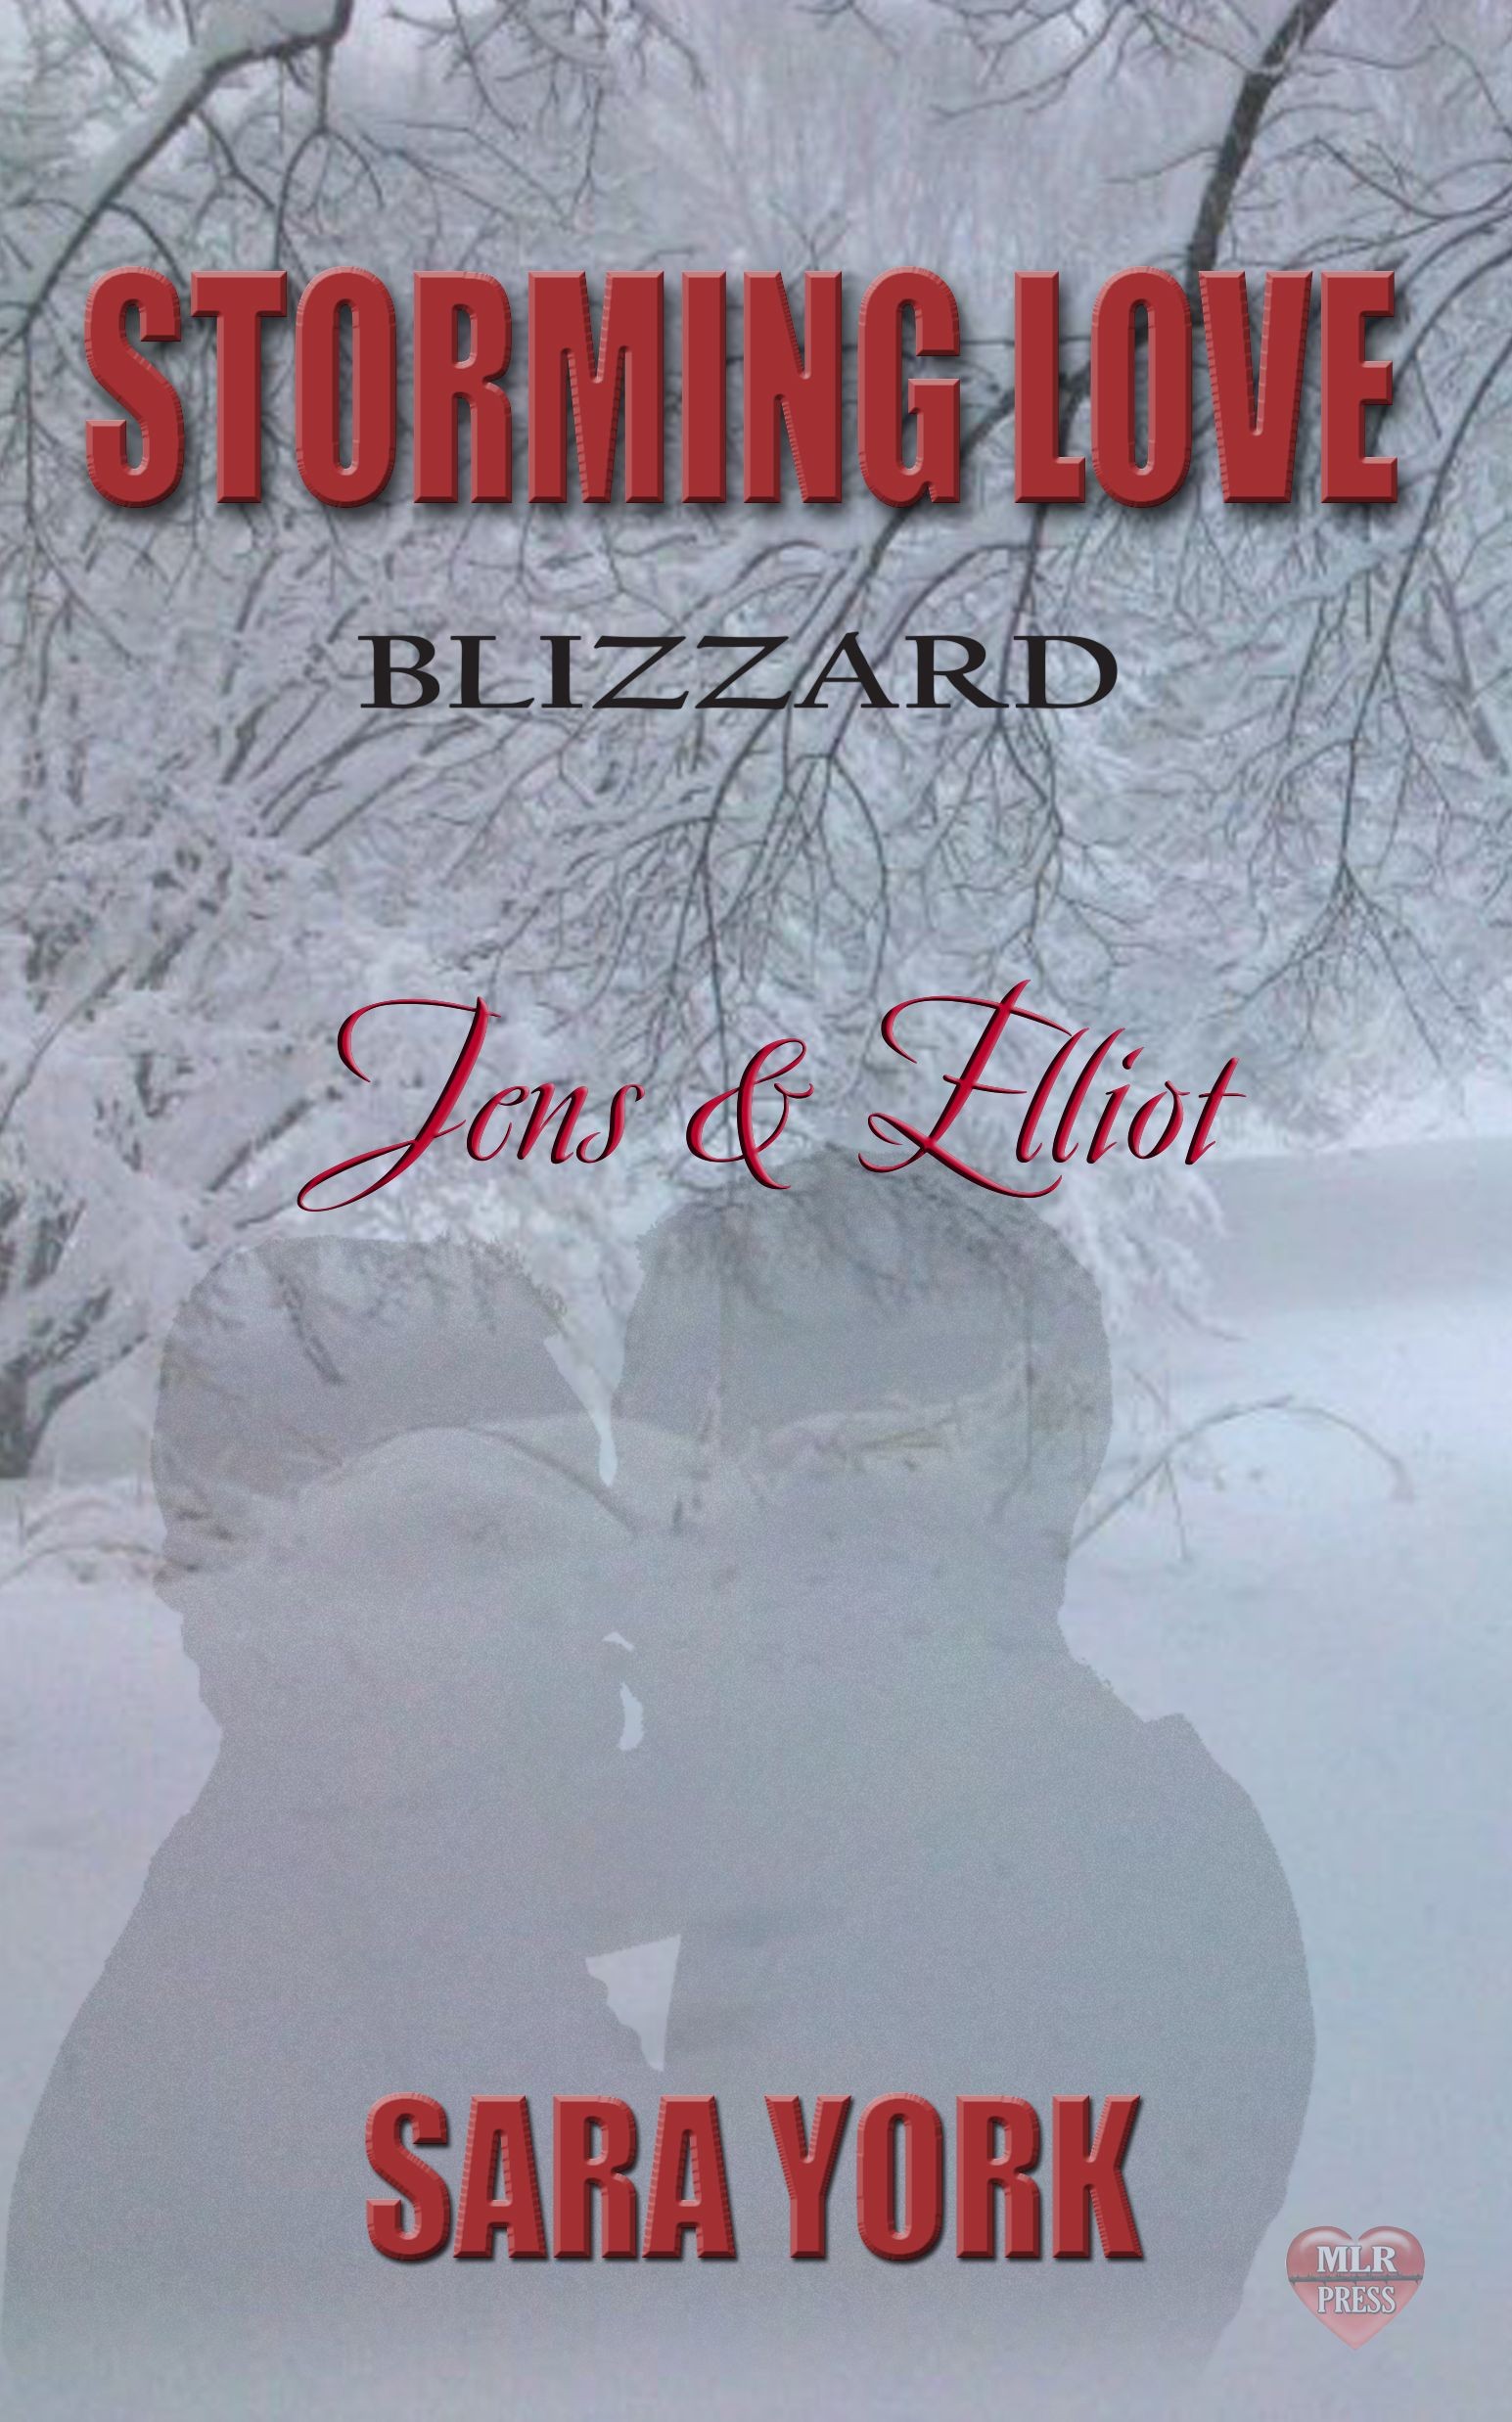 StormingLove Blizzard JensElliot (2015)